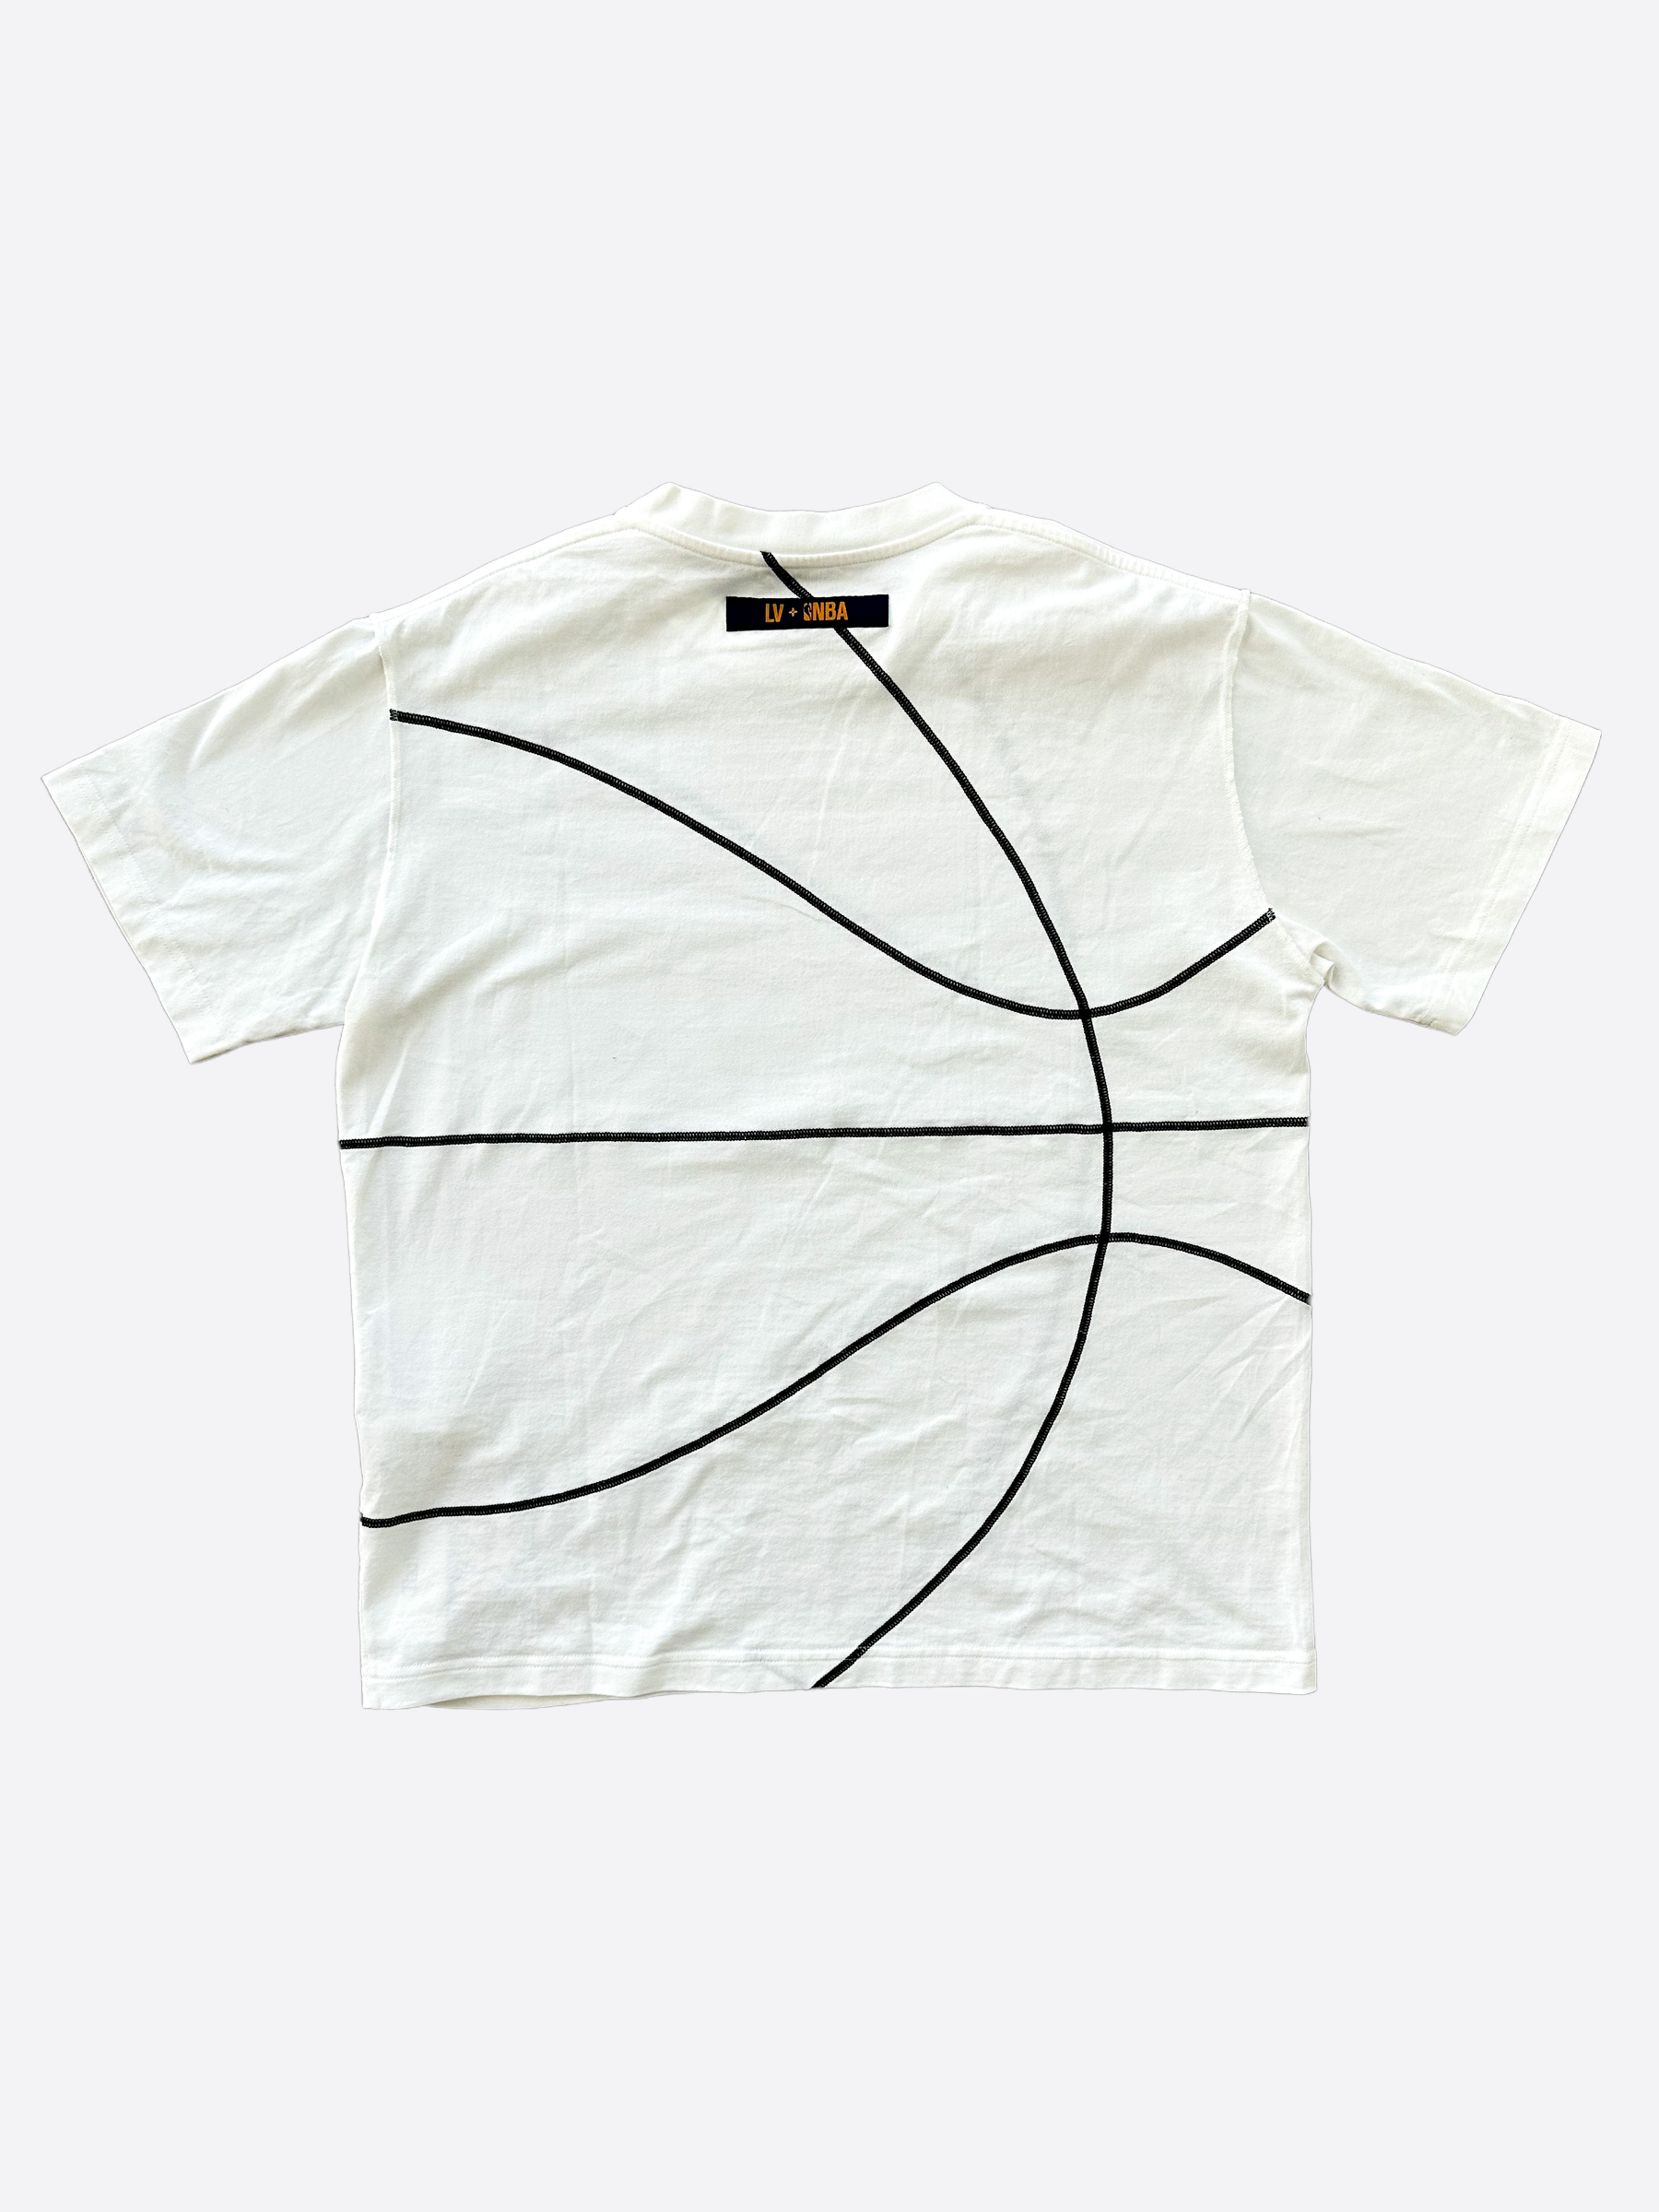 Louis Vuitton White NBA Basketball Shirt, hoodie, sweater, long sleeve and  tank top